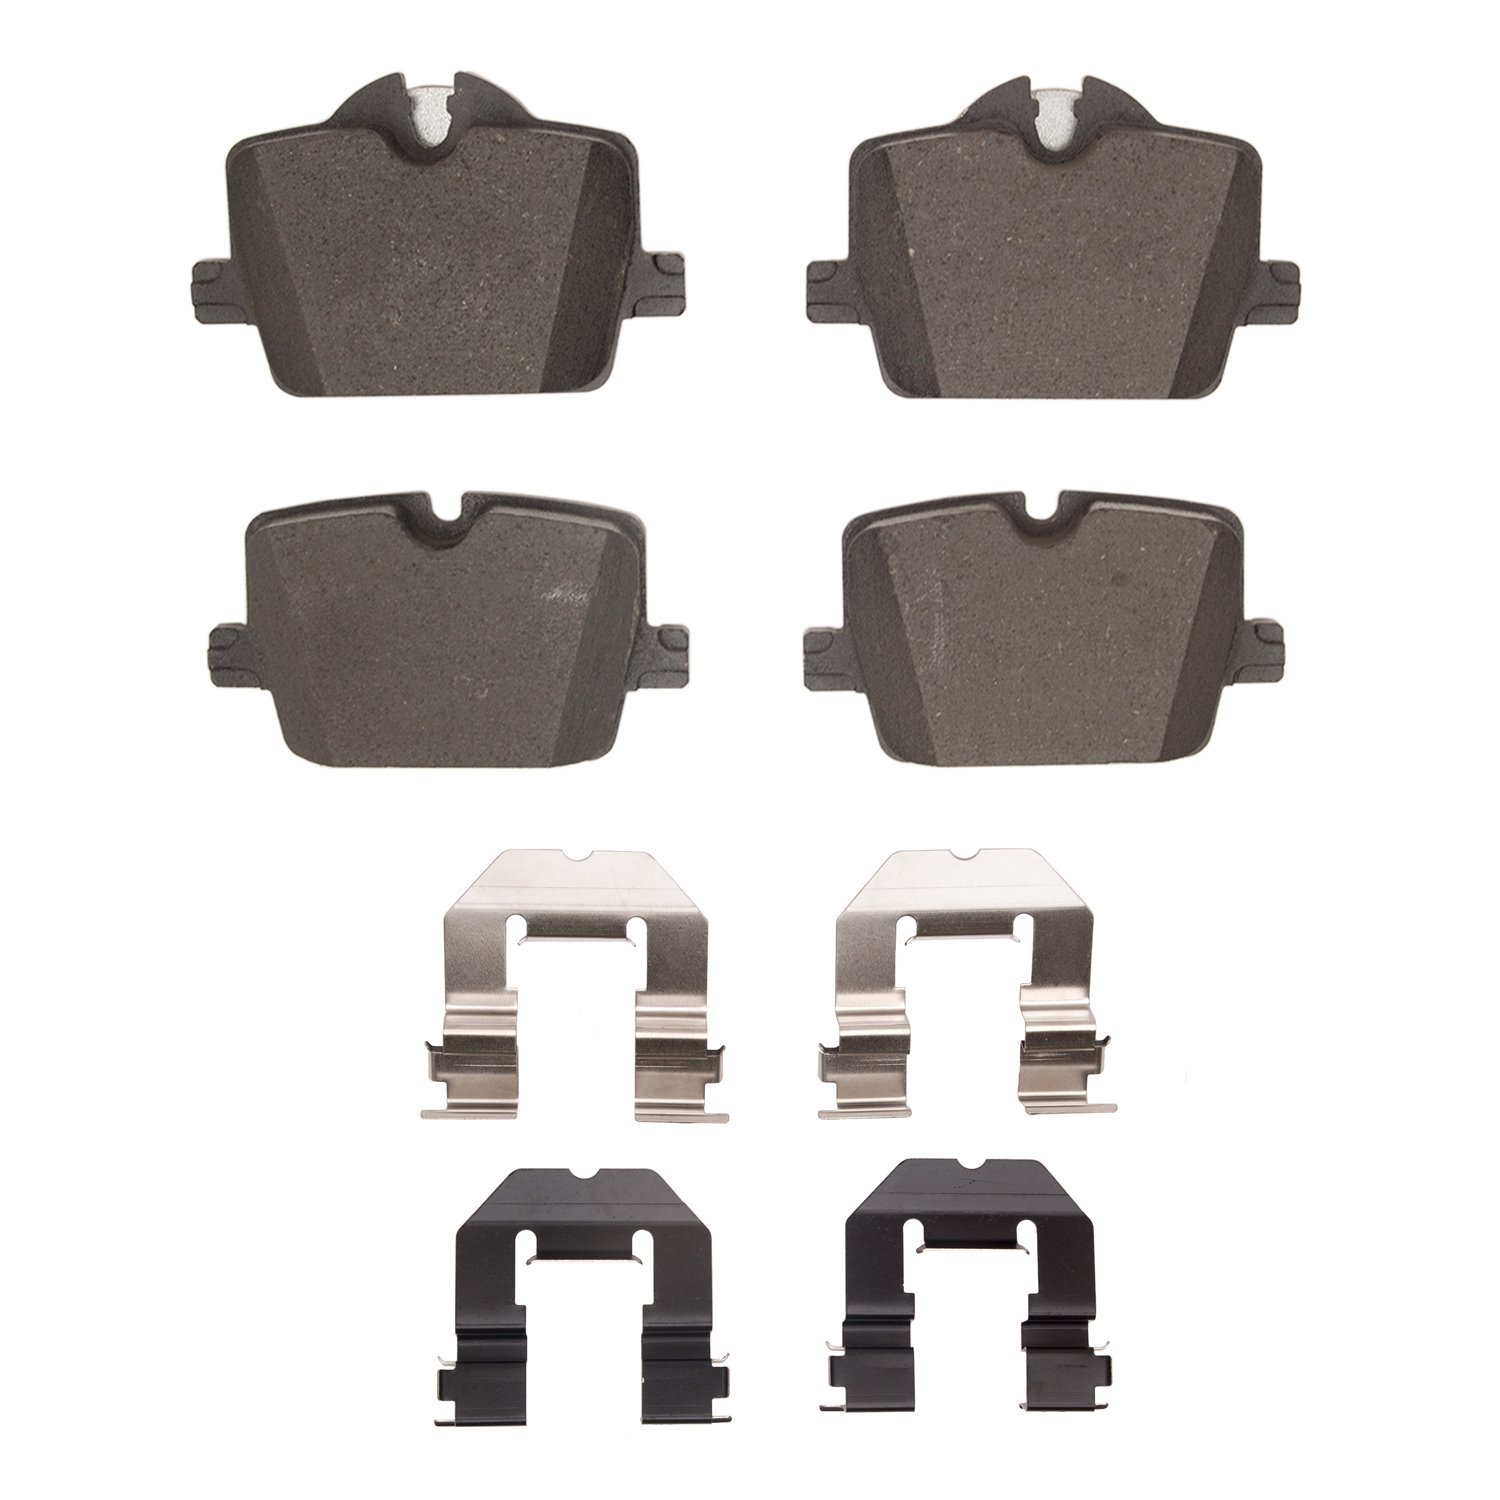 1551-2221-01 5000 Advanced Ceramic Brake Pads & Hardware Kit, Fits Select Multiple Makes/Models, Position: Rear